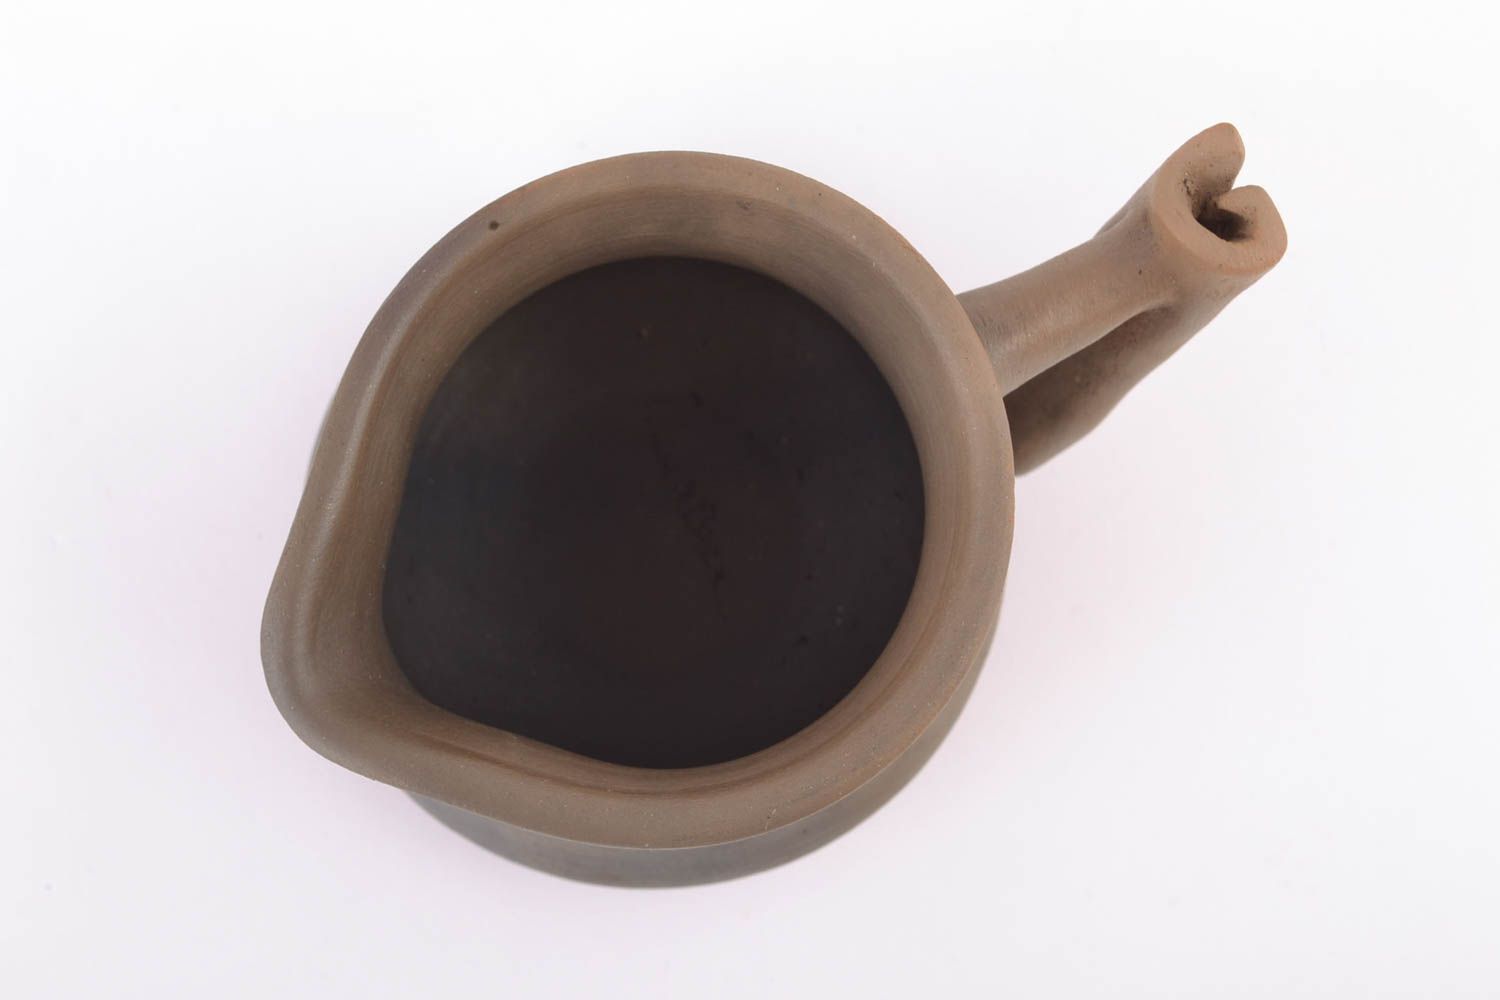 10 oz ceramic handmade creamer pitcher in brown color 0,41 lb photo 2